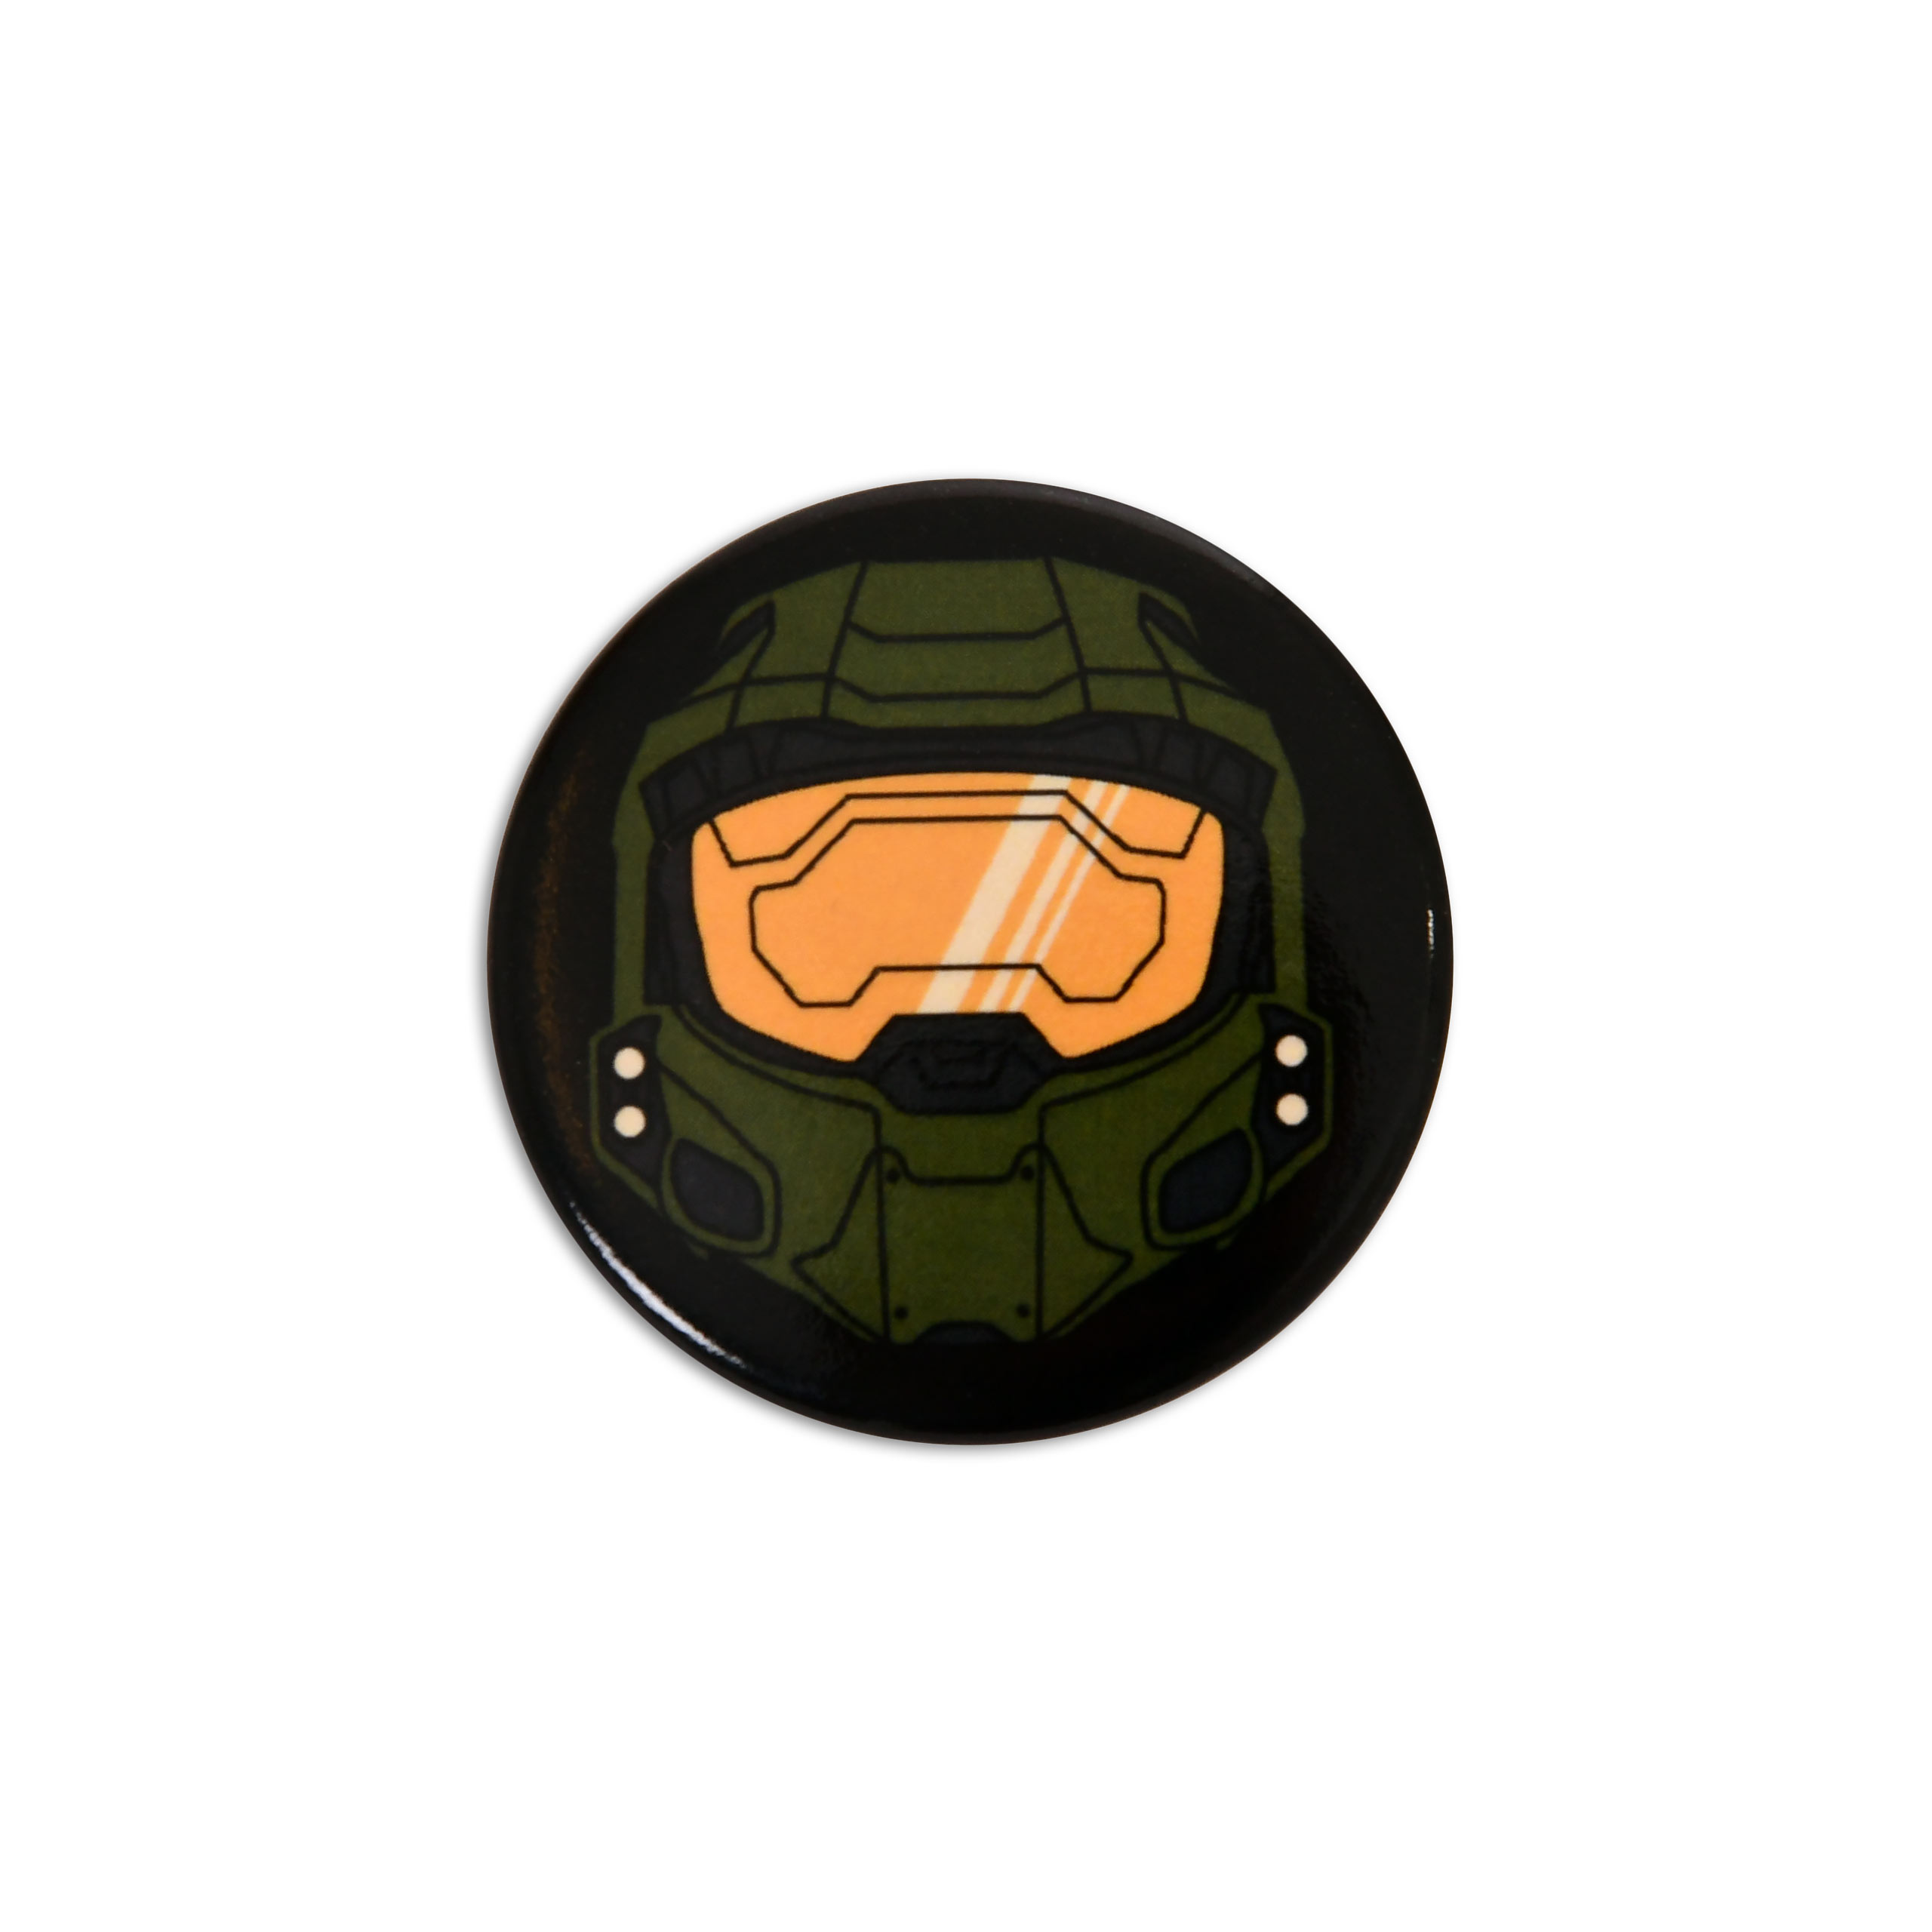 Master Chief-knop voor Halo-fans